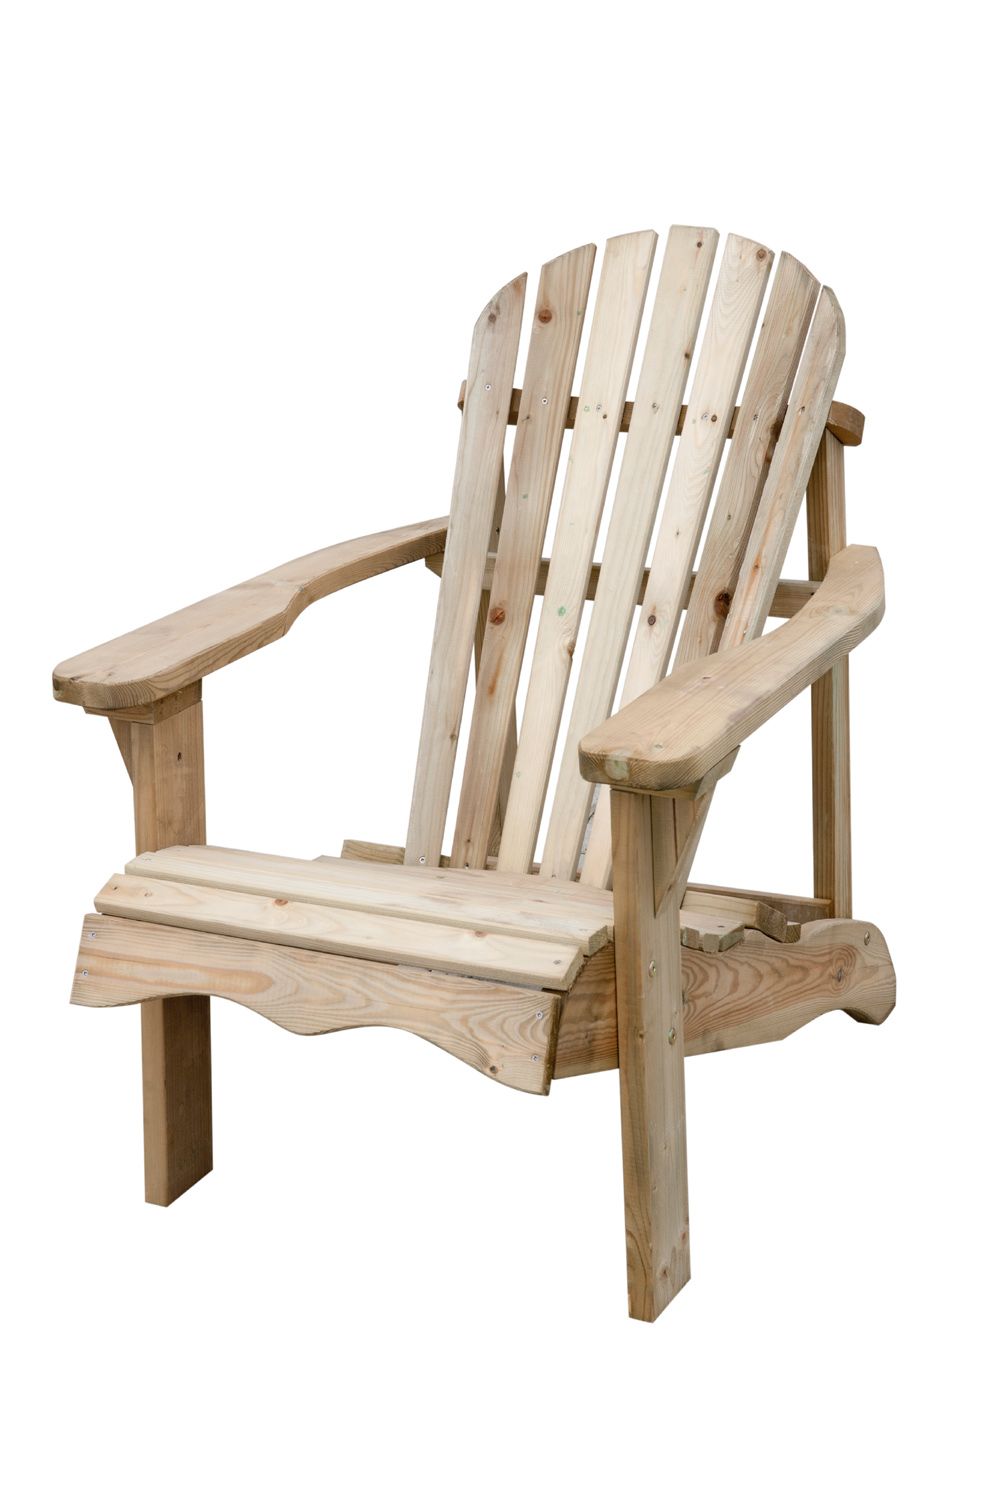 Mooie houte veranda stoel, geimpregneerd.